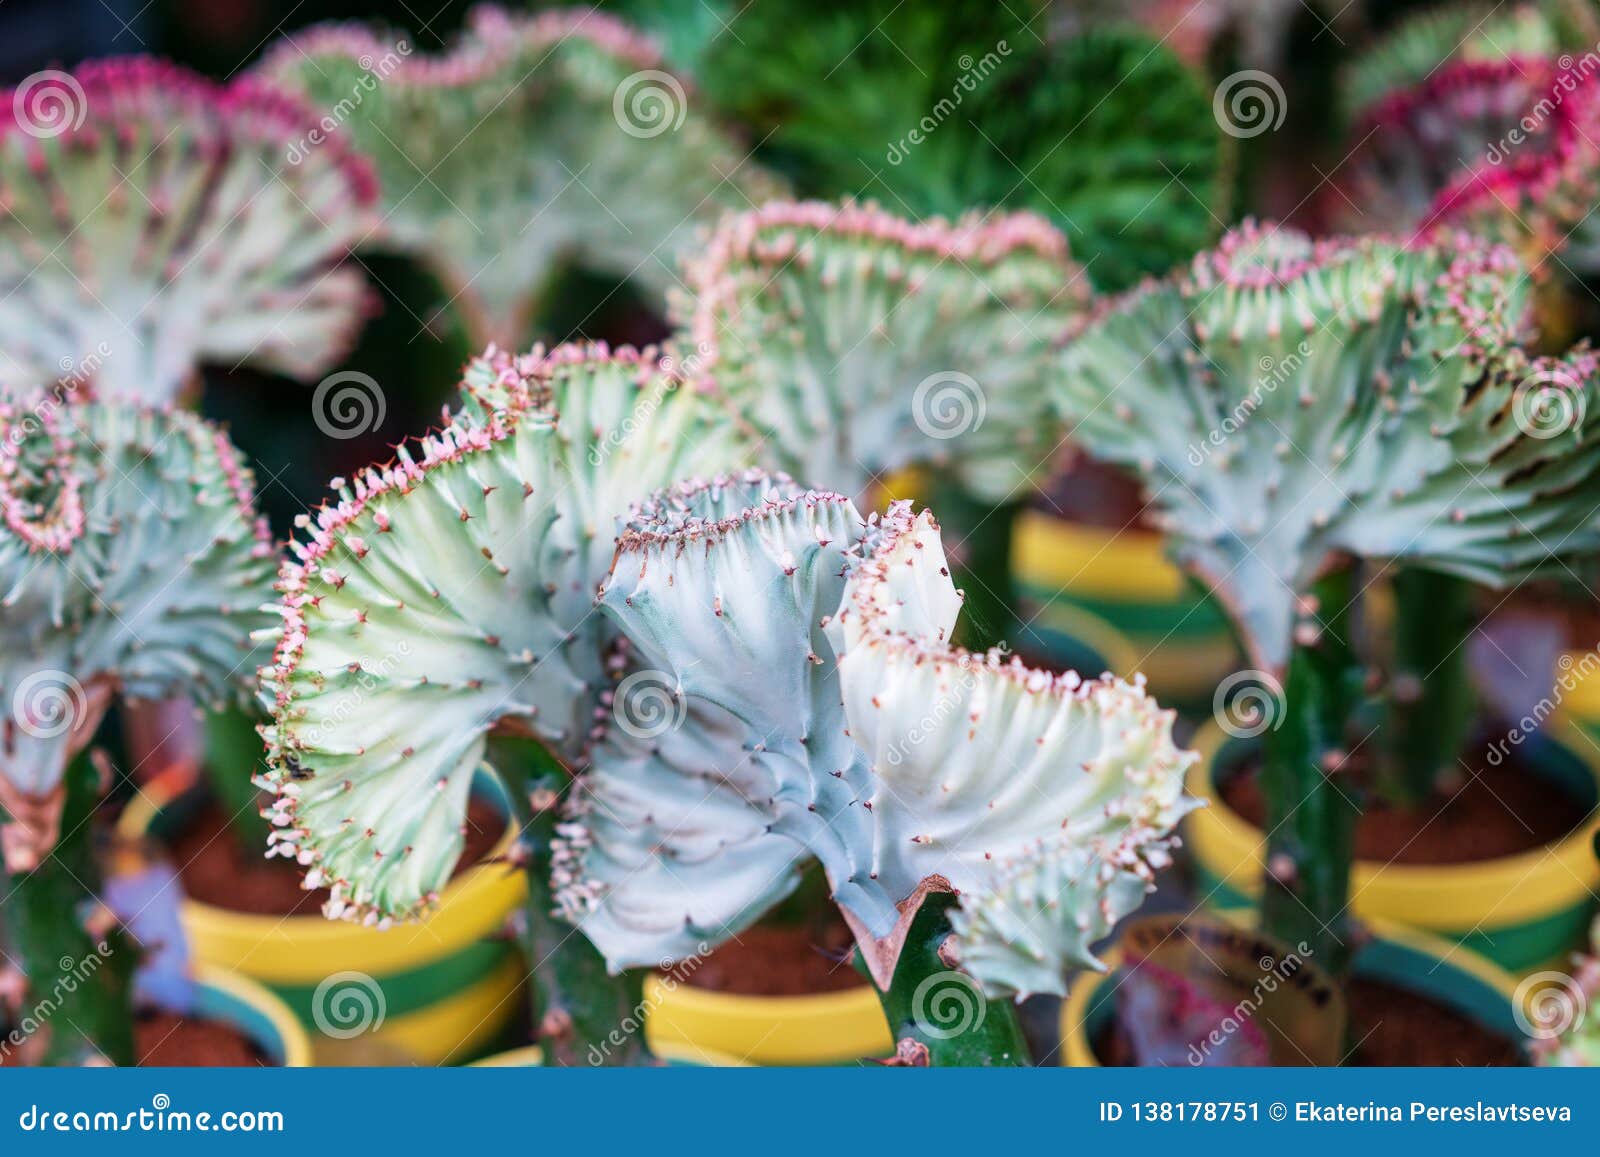 euphorbia lactea cristata grafted variegated cactus